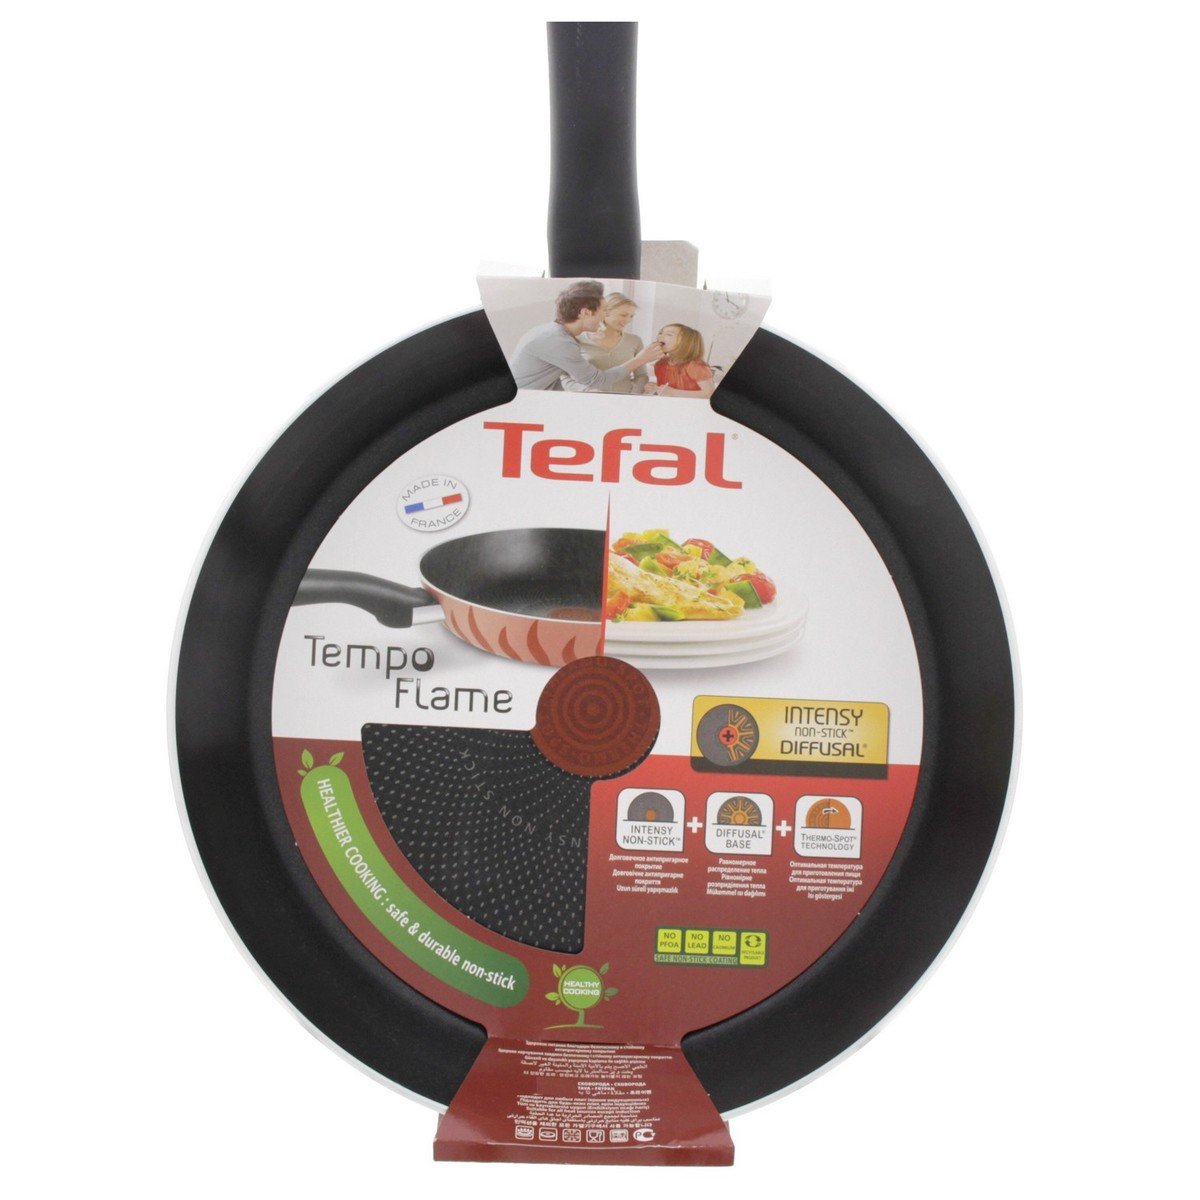 Tefal Tempo Flame Fry Pan, 28 cm, C0450662